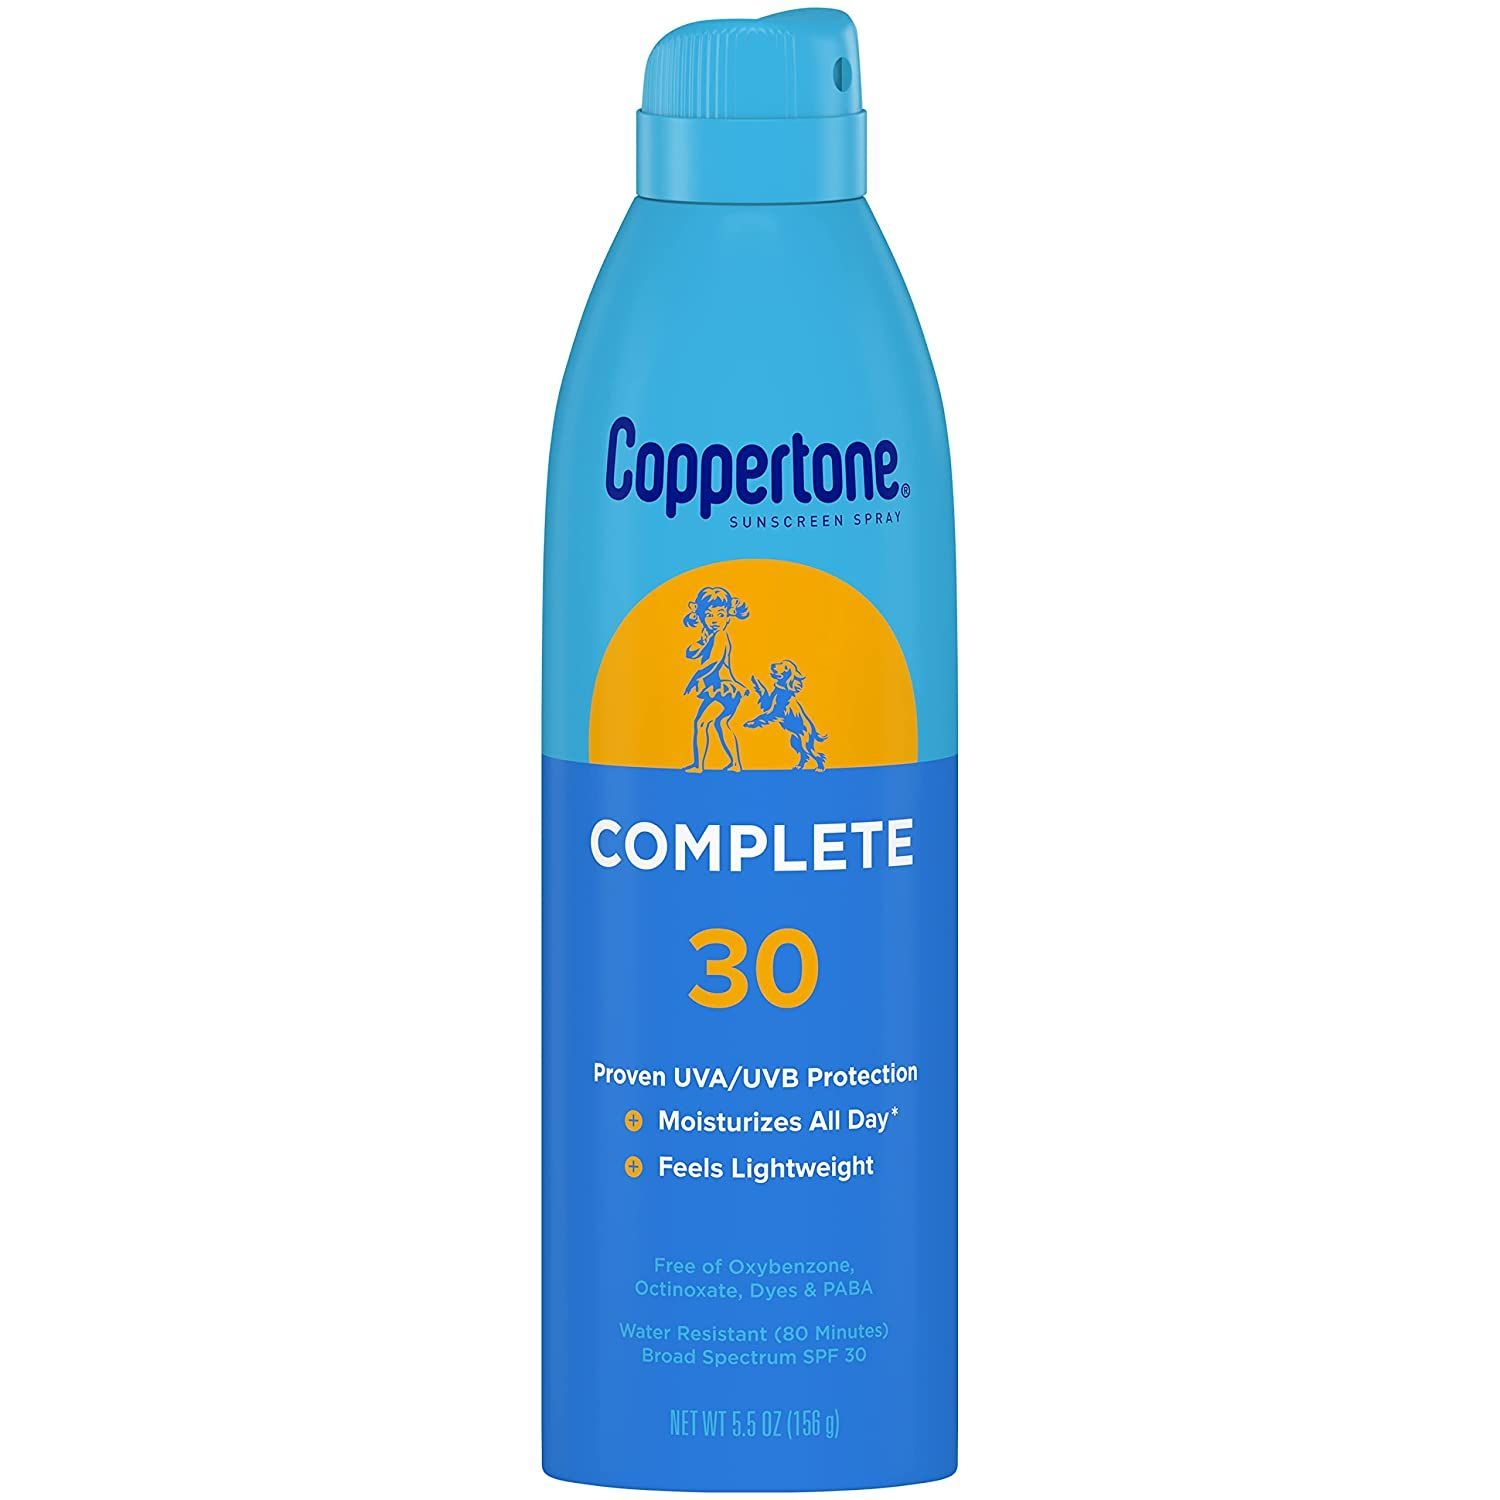 Complete Sunscreen Spray